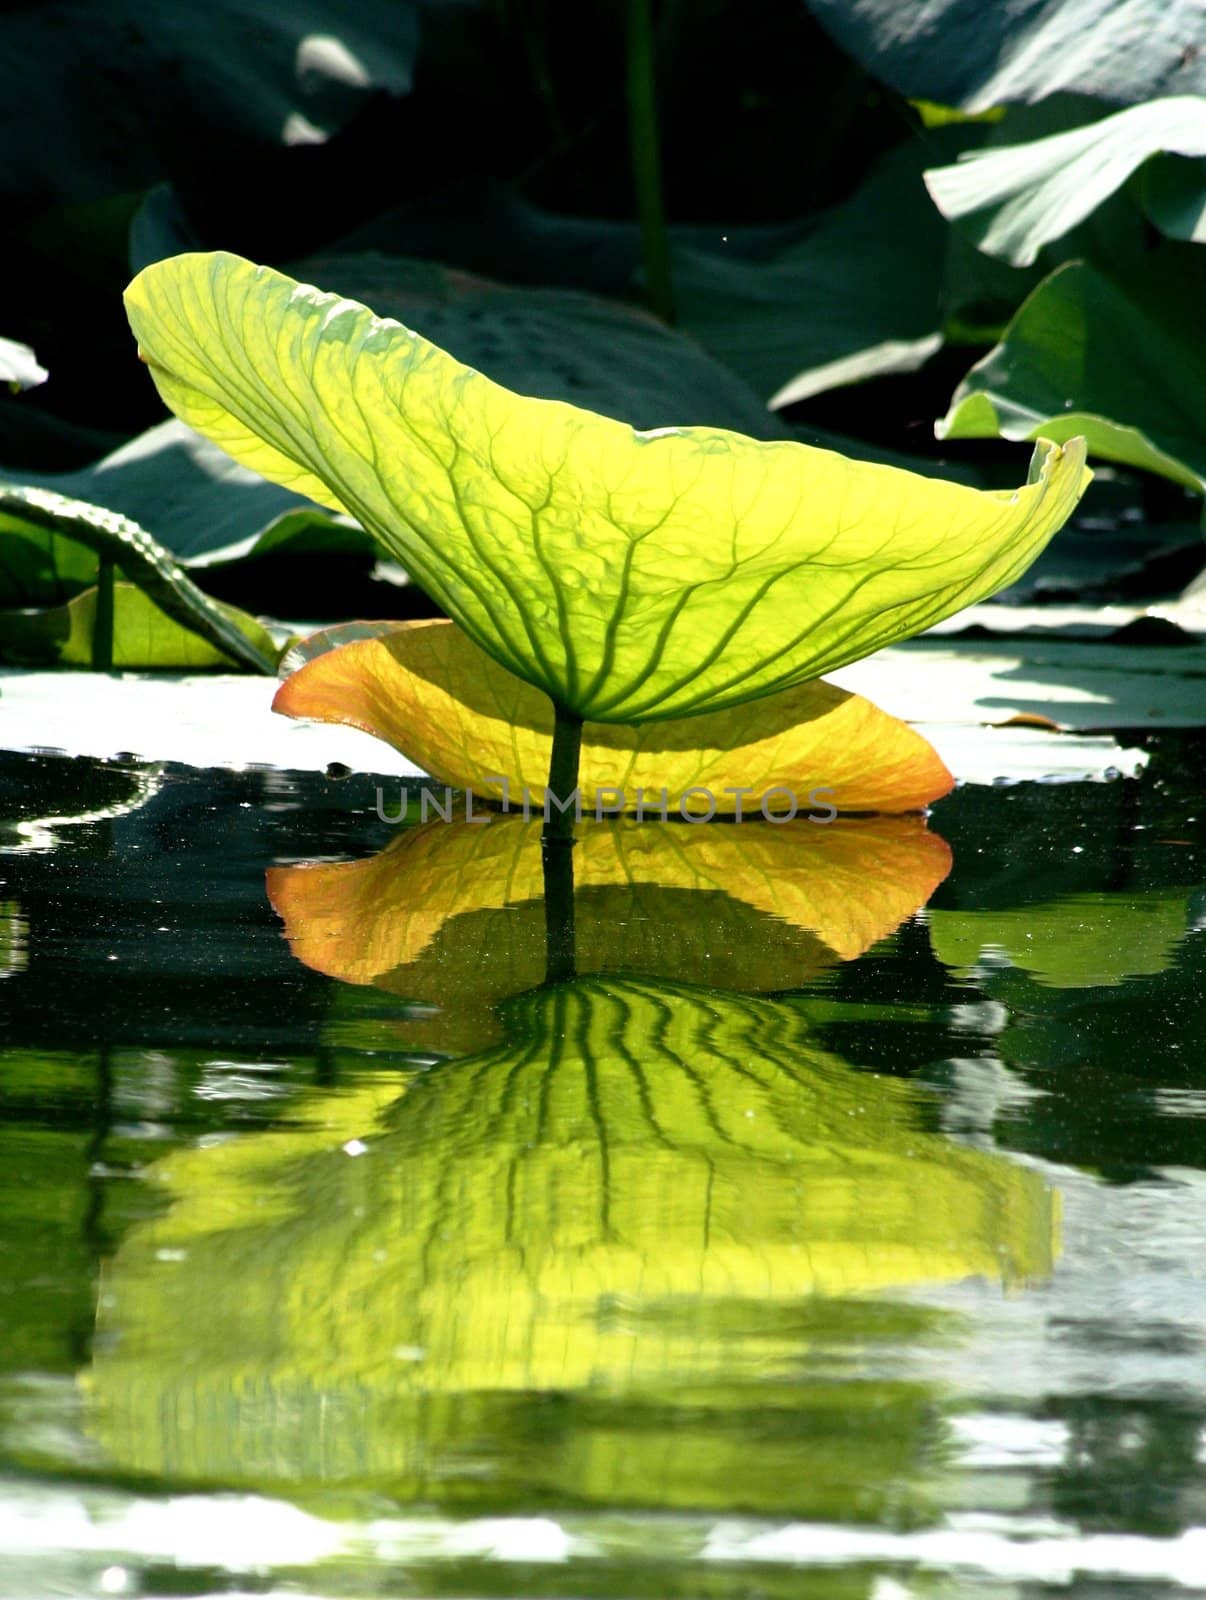 Lotus leaf by adrianocastelli